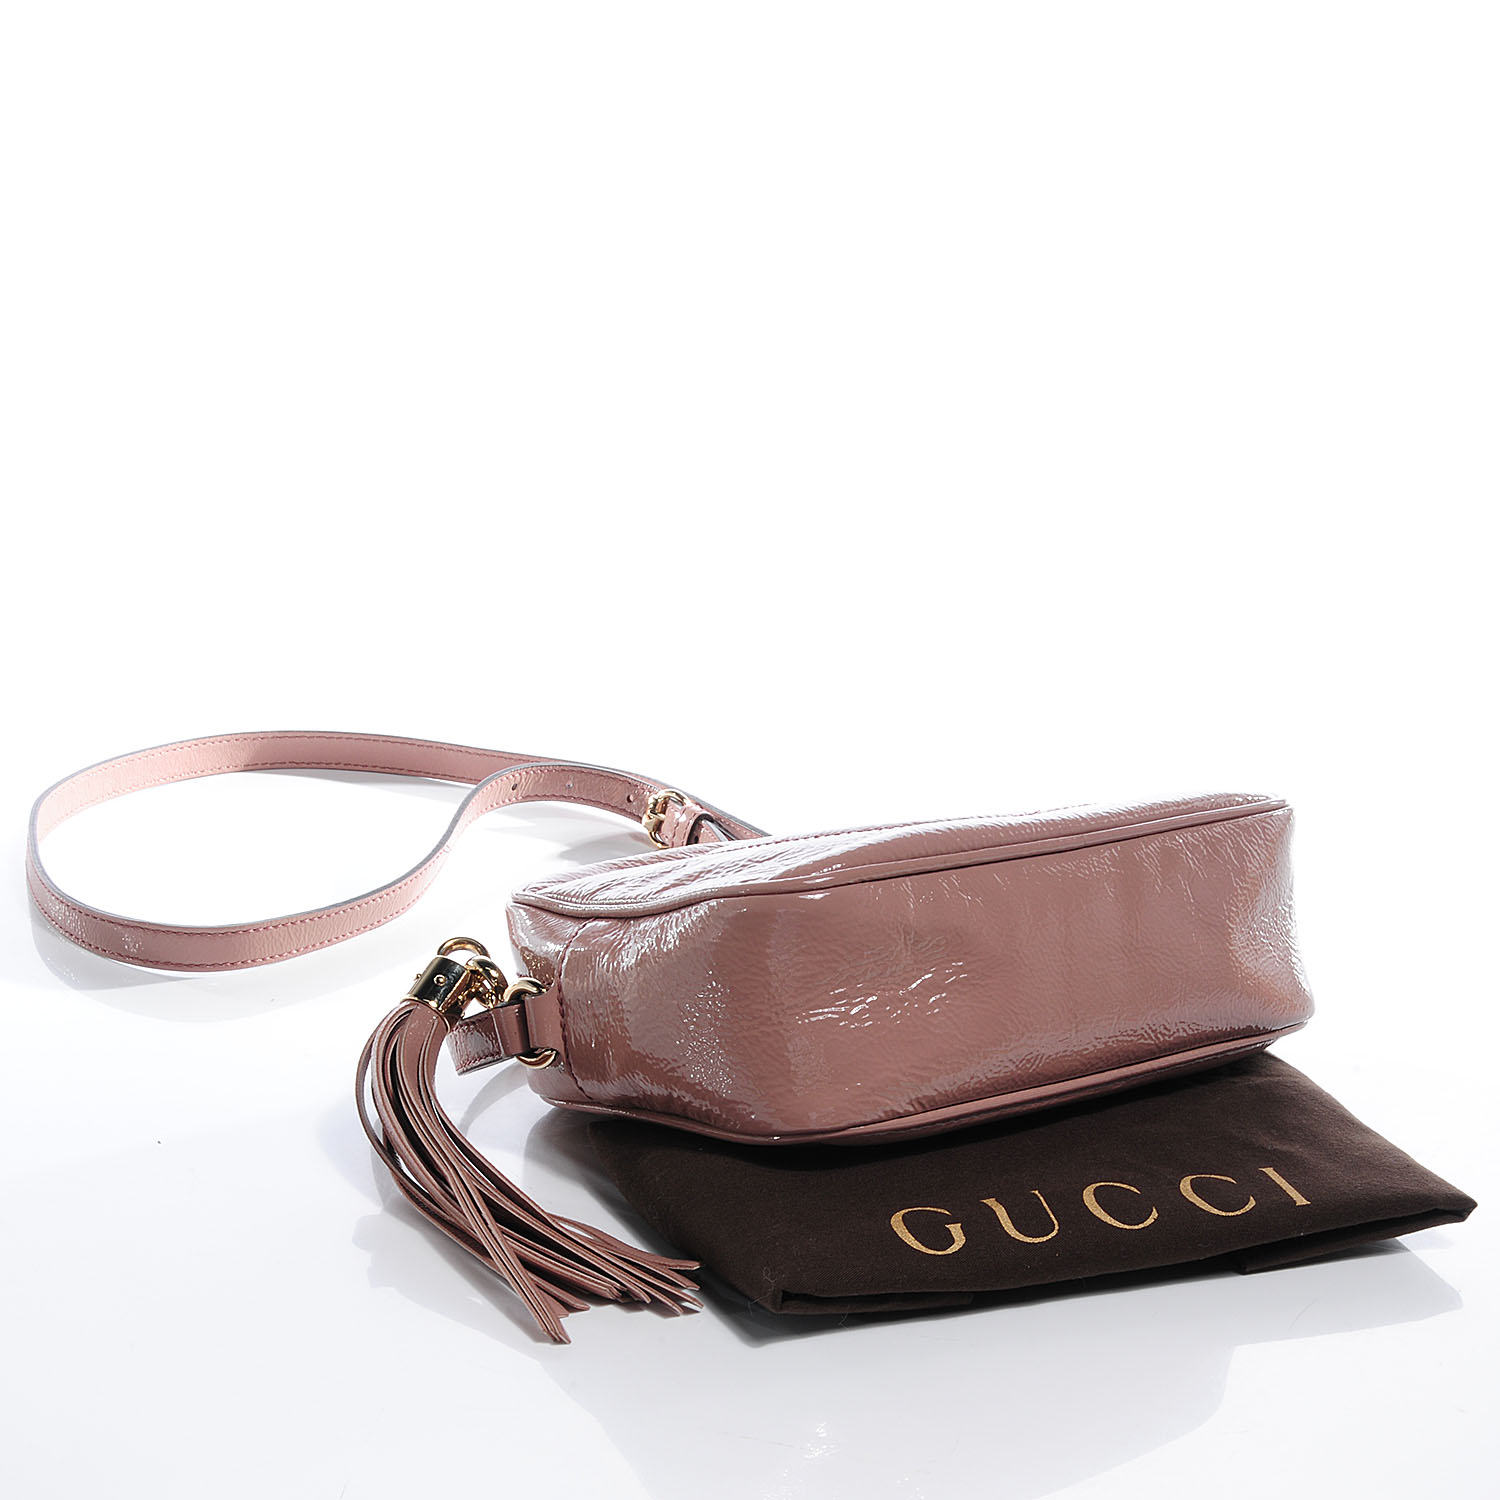 GUCCI Soft Patent Small Soho Disco Bag Blush Pink 61655